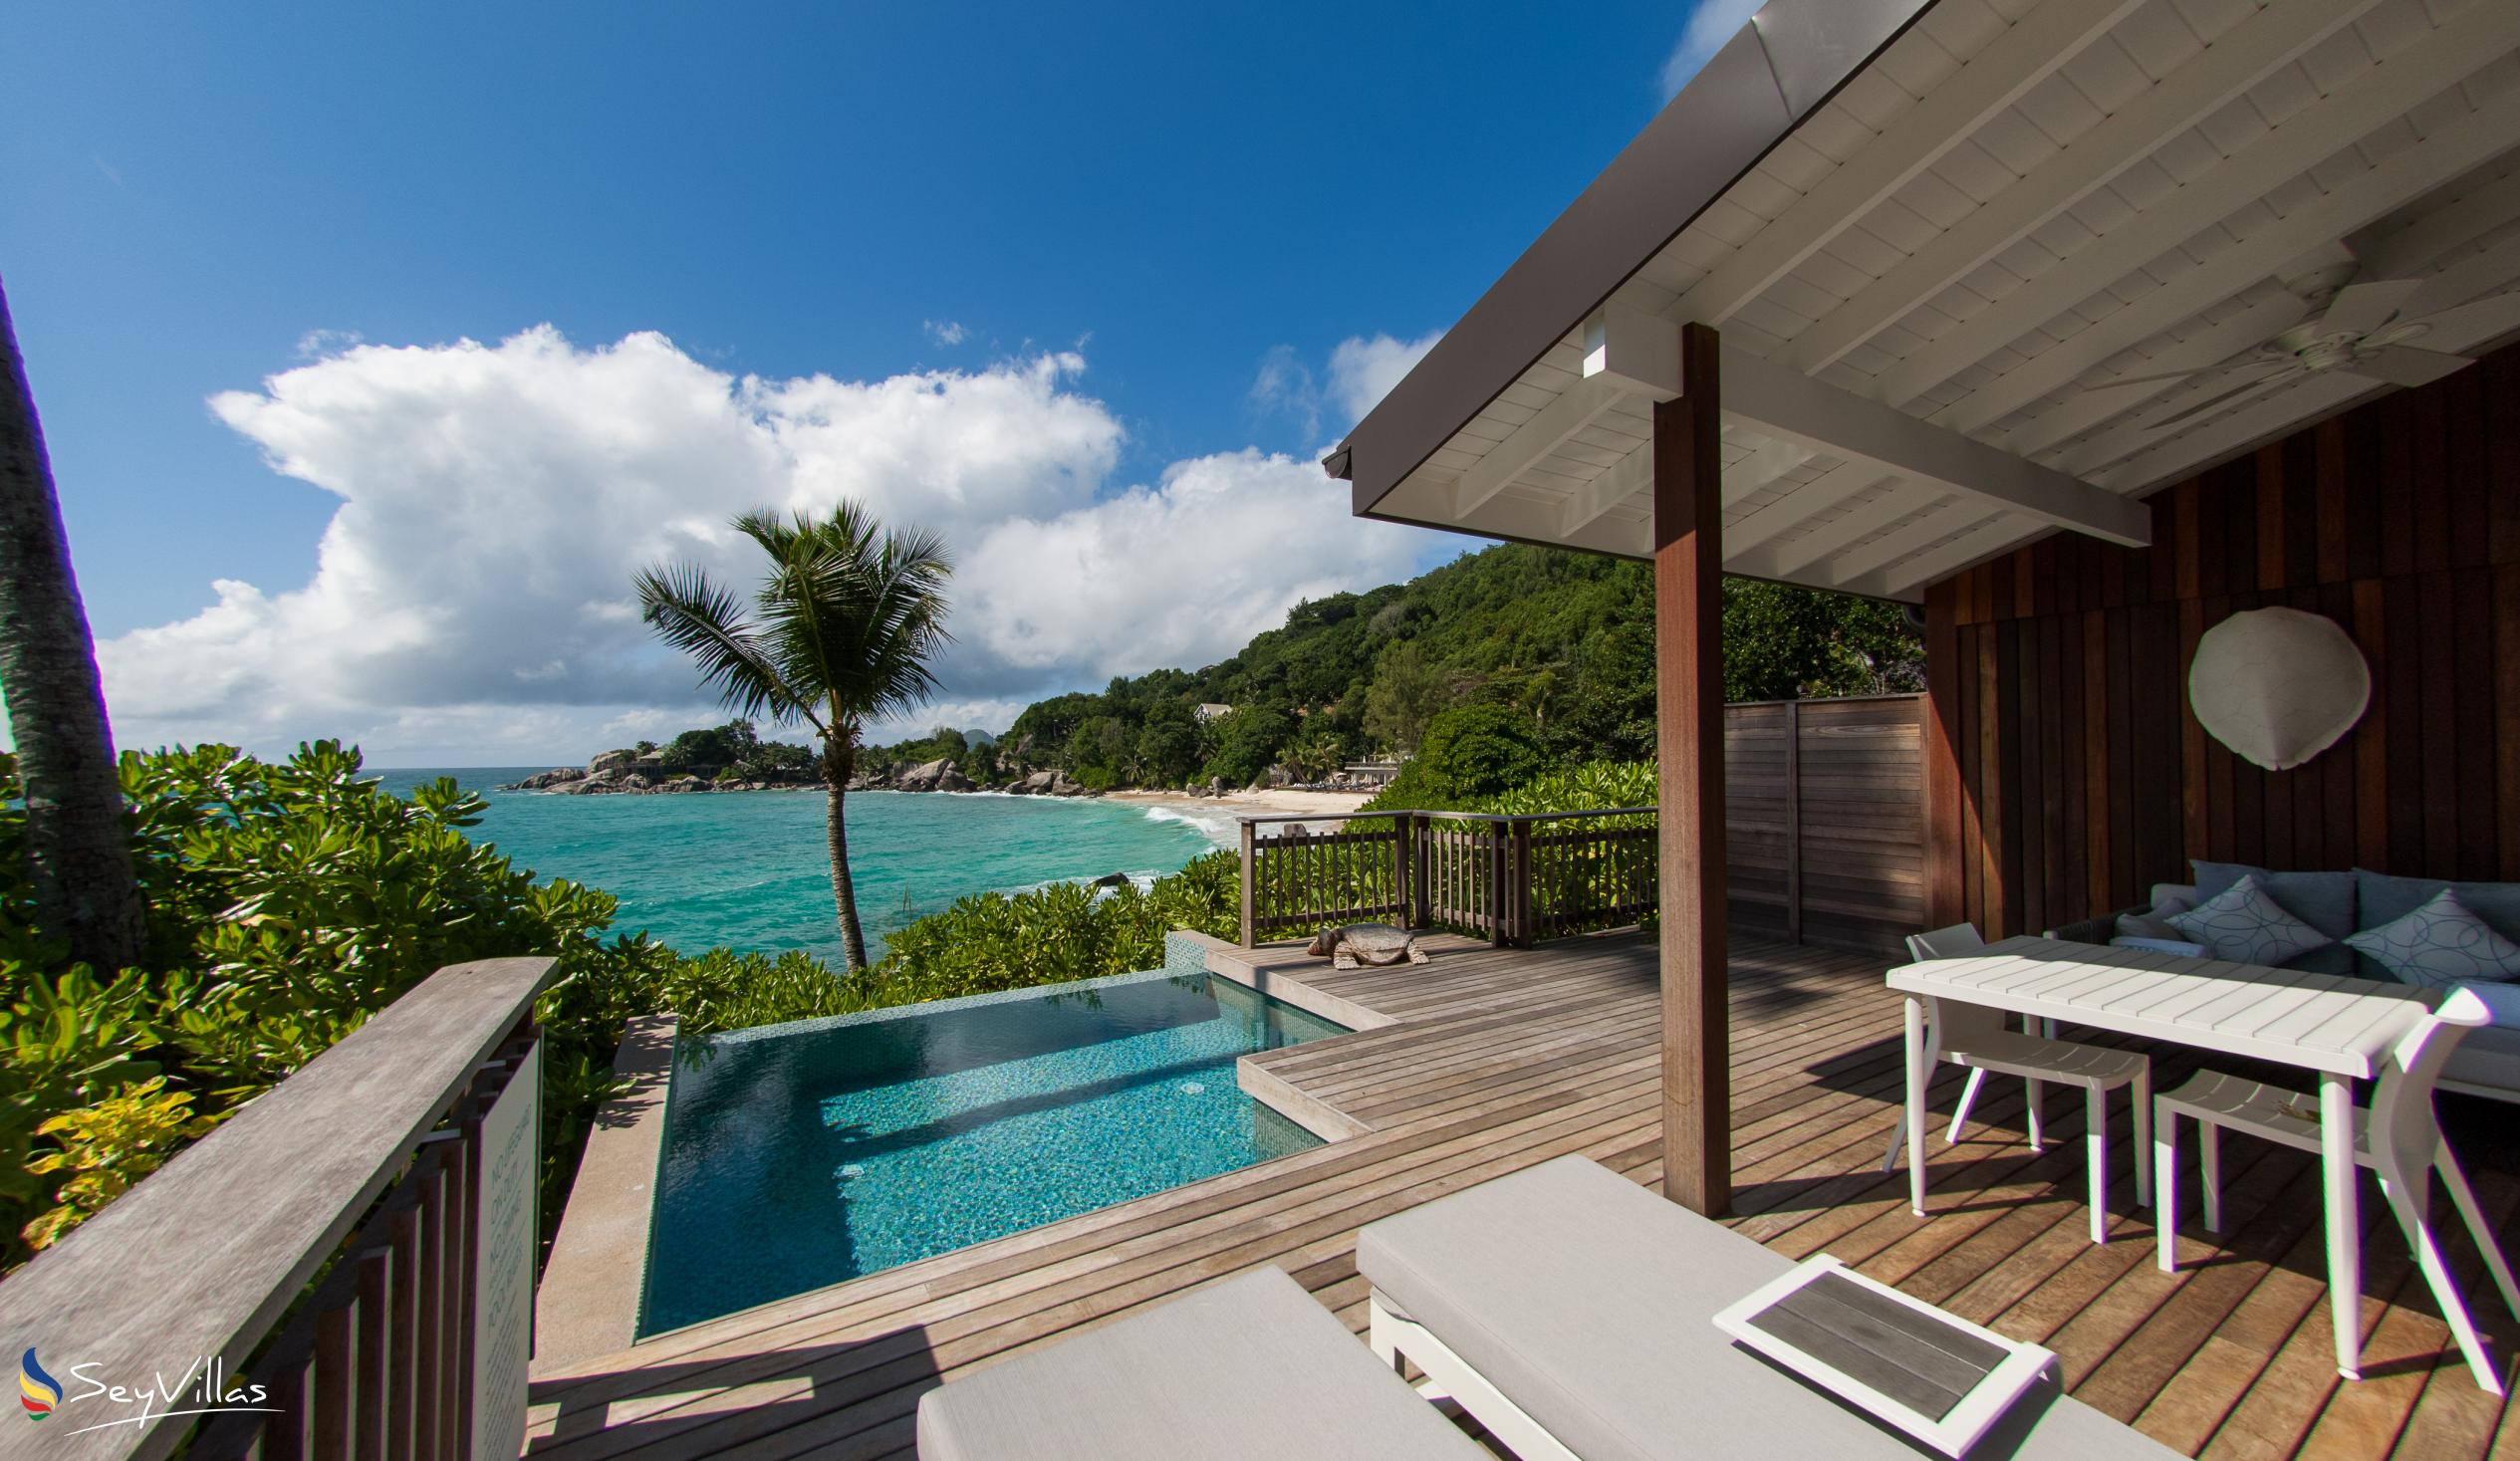 Foto 11: Carana Beach Hotel - Chalet vista mare e con piscina - Mahé (Seychelles)